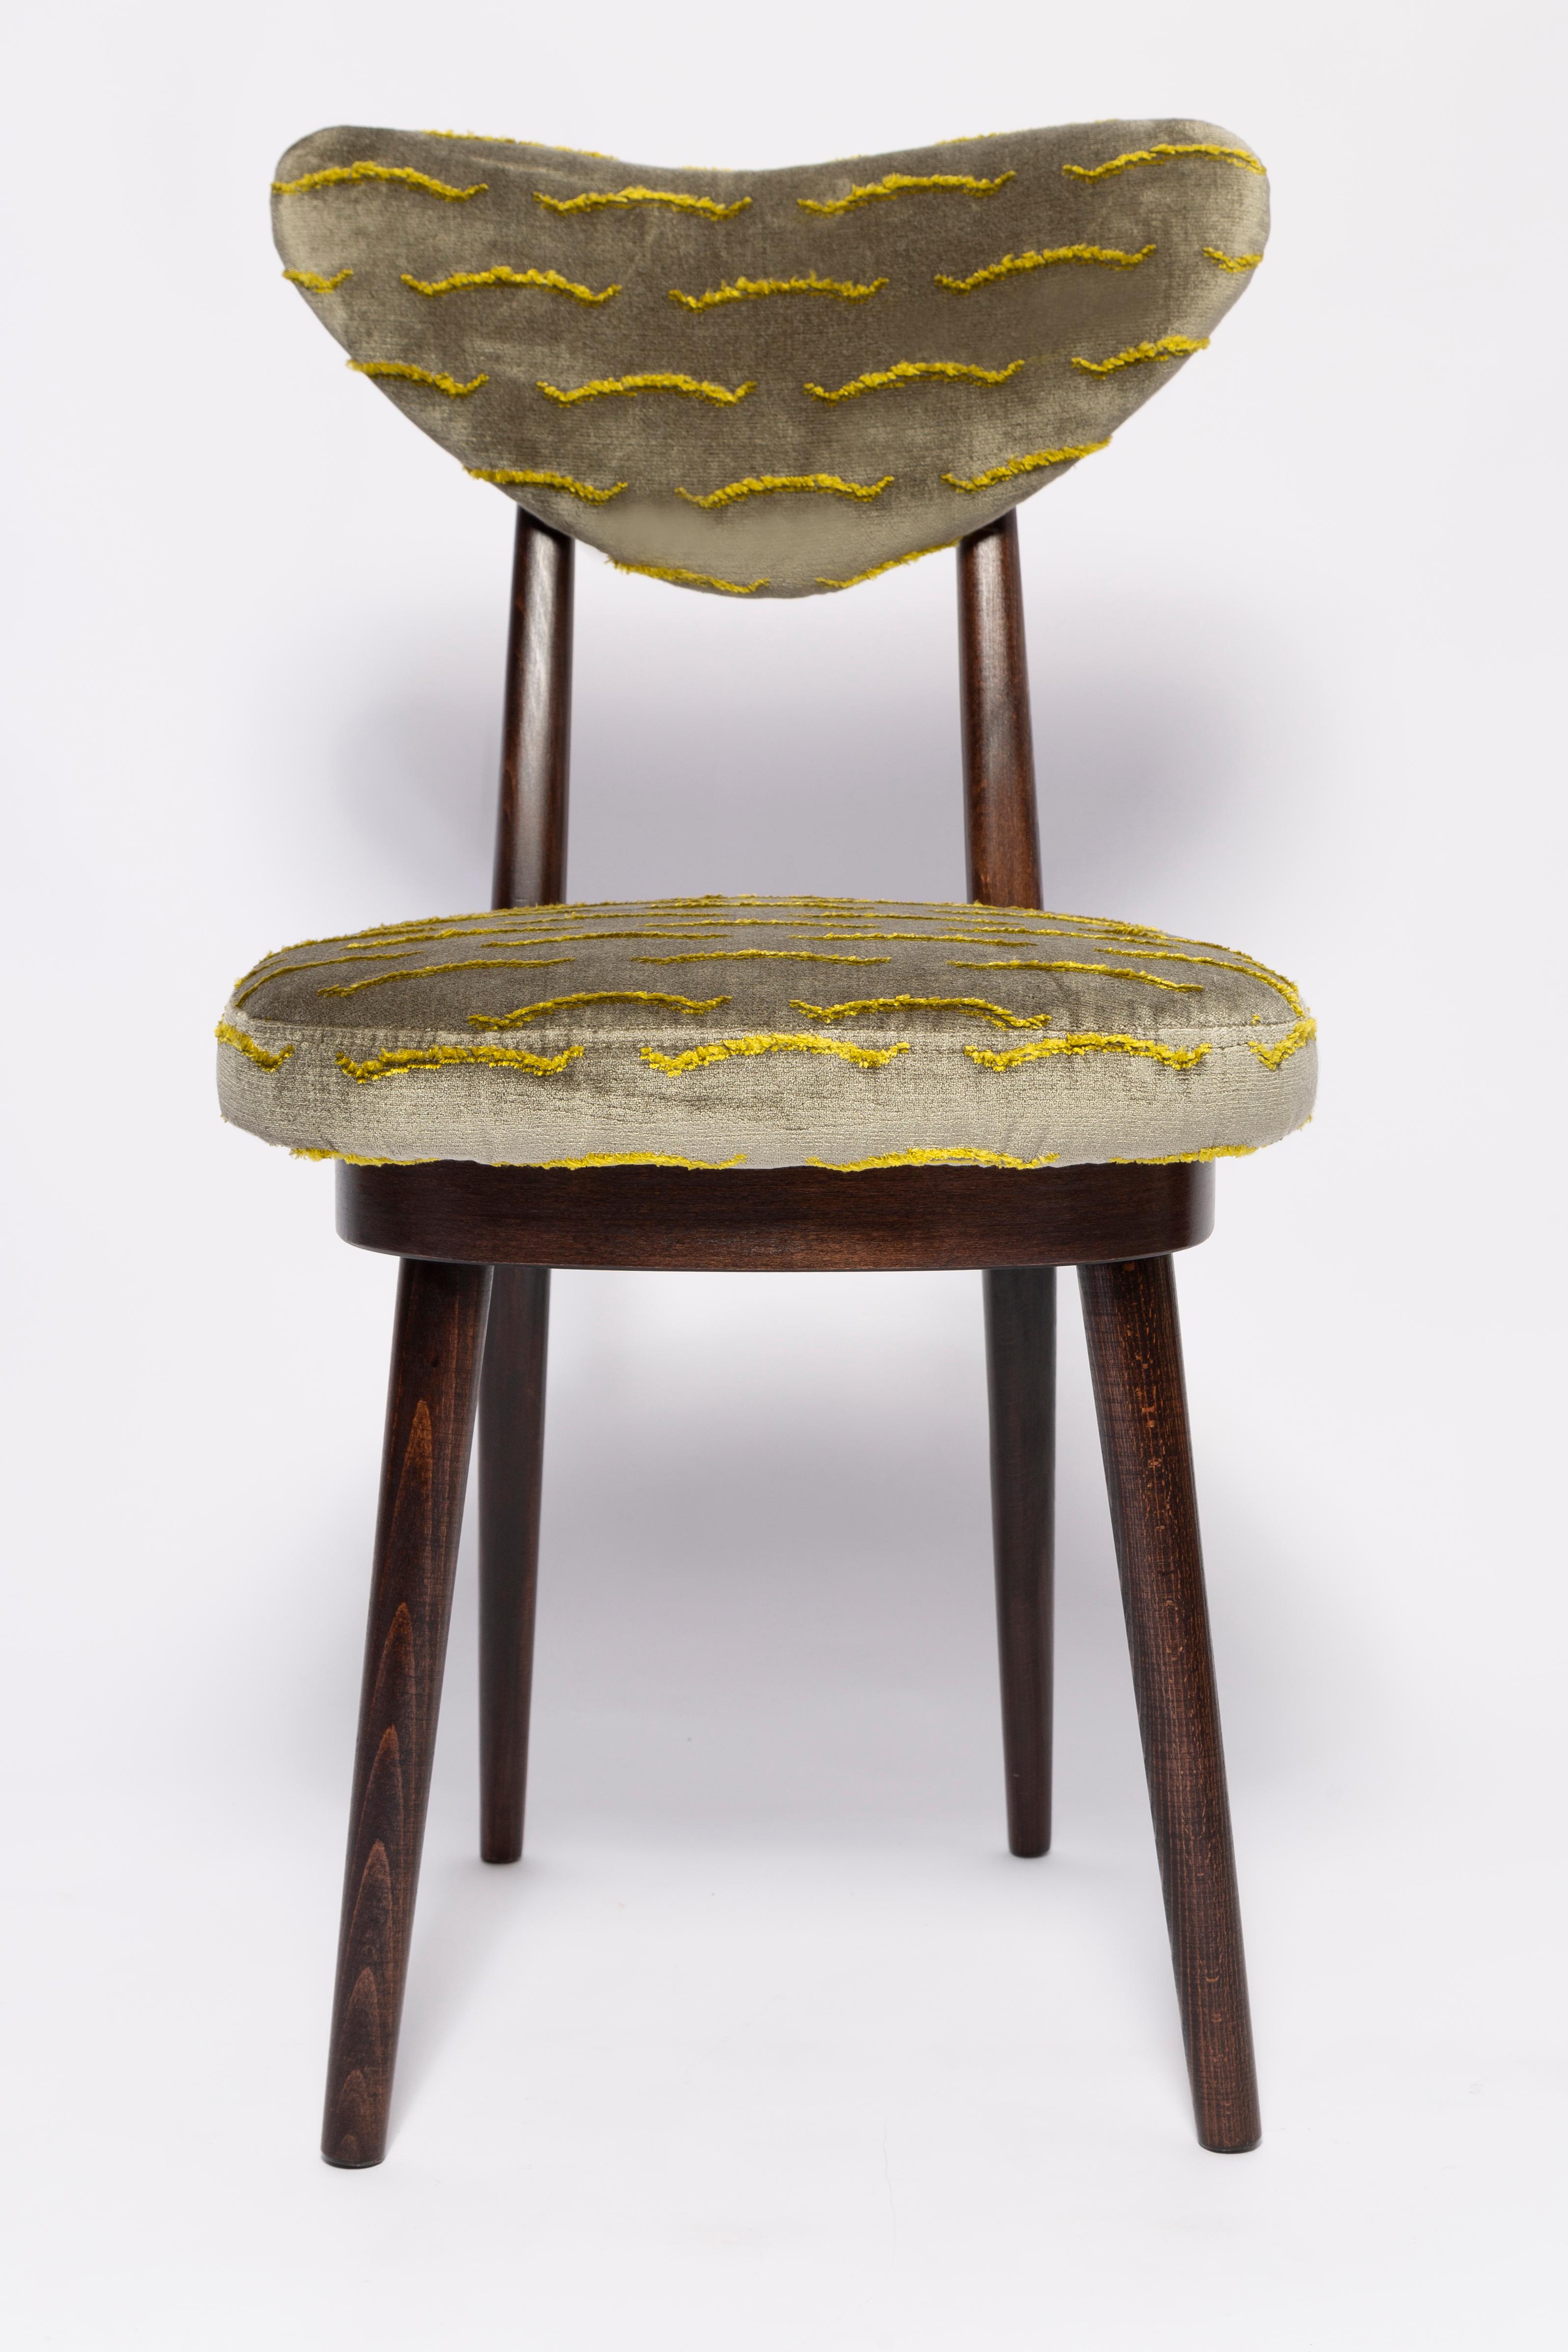 Twelve Mid Century Heart Chairs in Nouvelles Vagues Green Velvet, Europe, 1960s In Excellent Condition For Sale In 05-080 Hornowek, PL